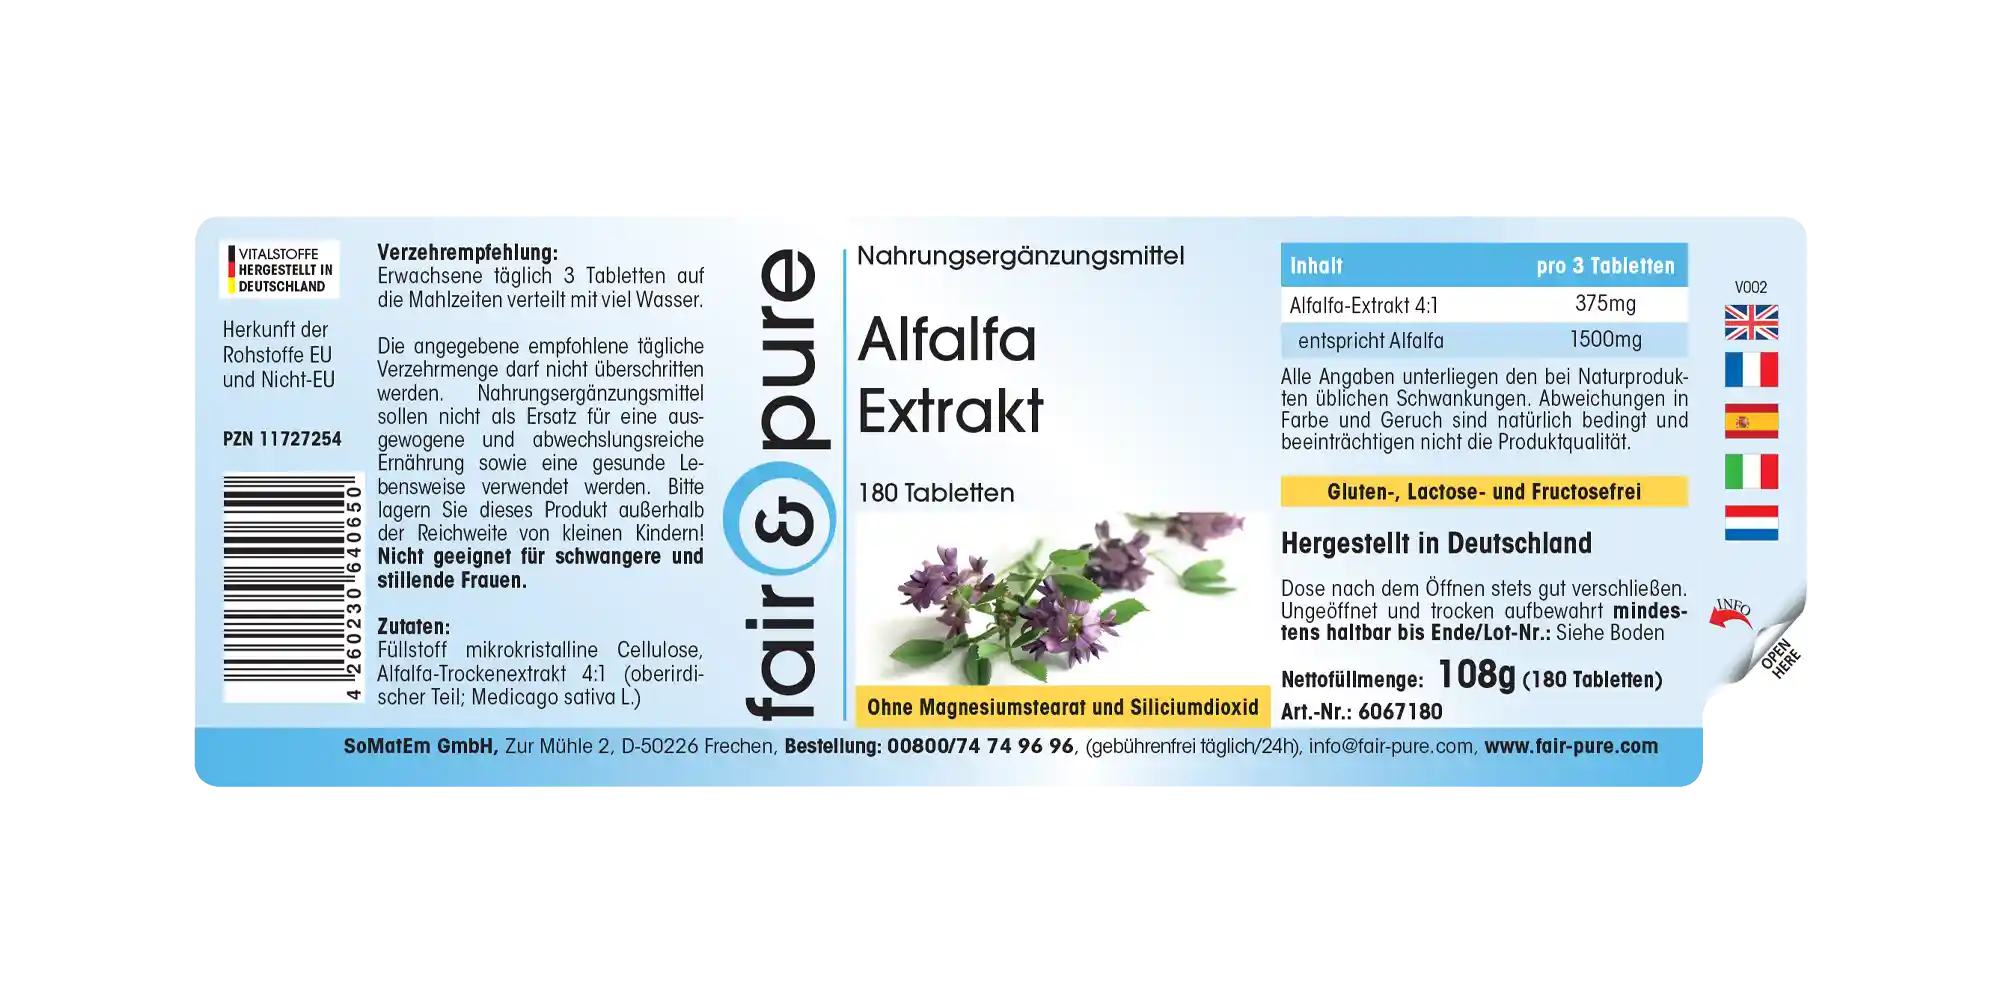 Alfalfa extract